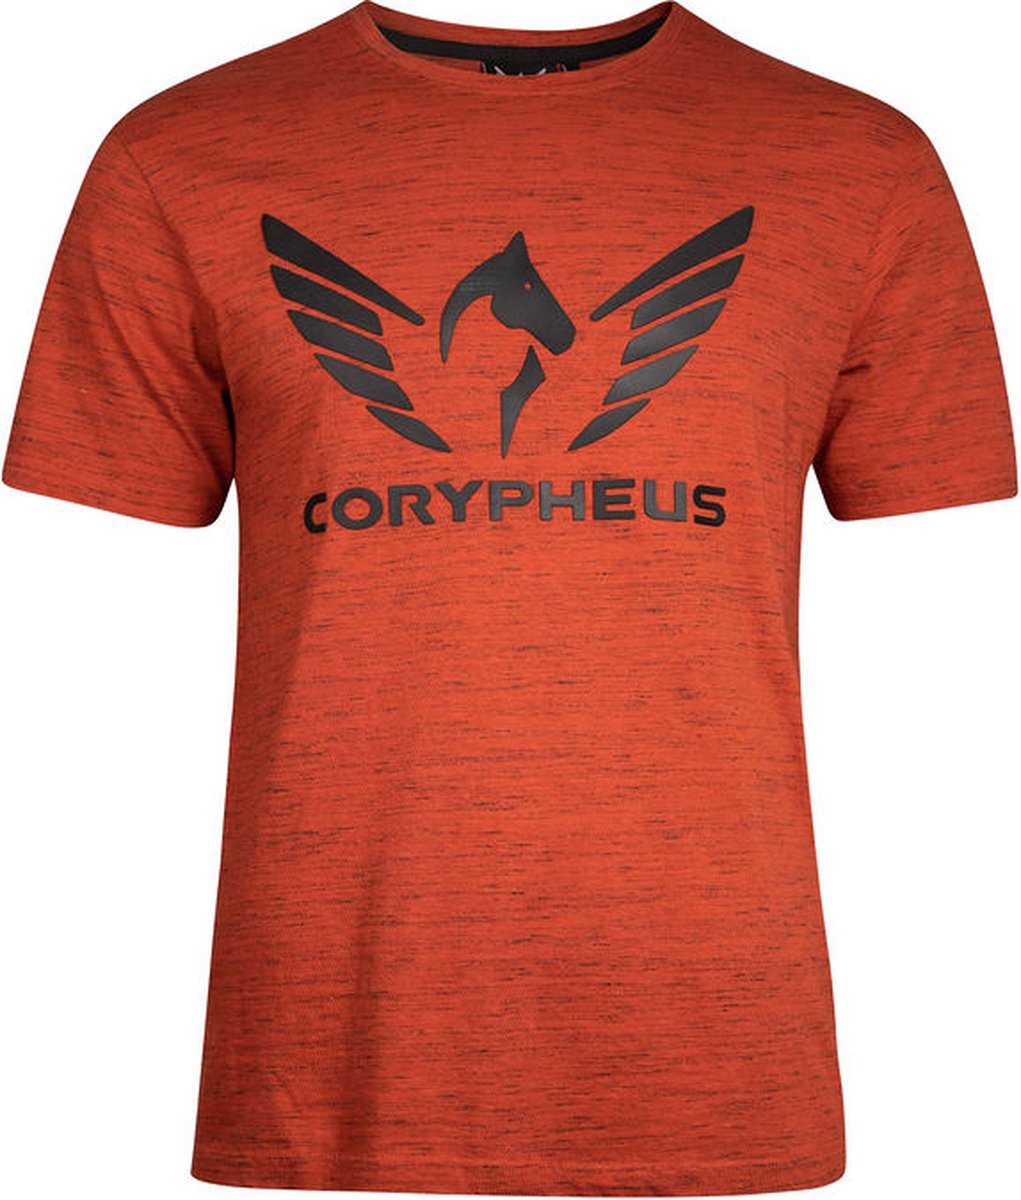 Corypheus Burnt Henna Men's T-Shirt - XXLarge